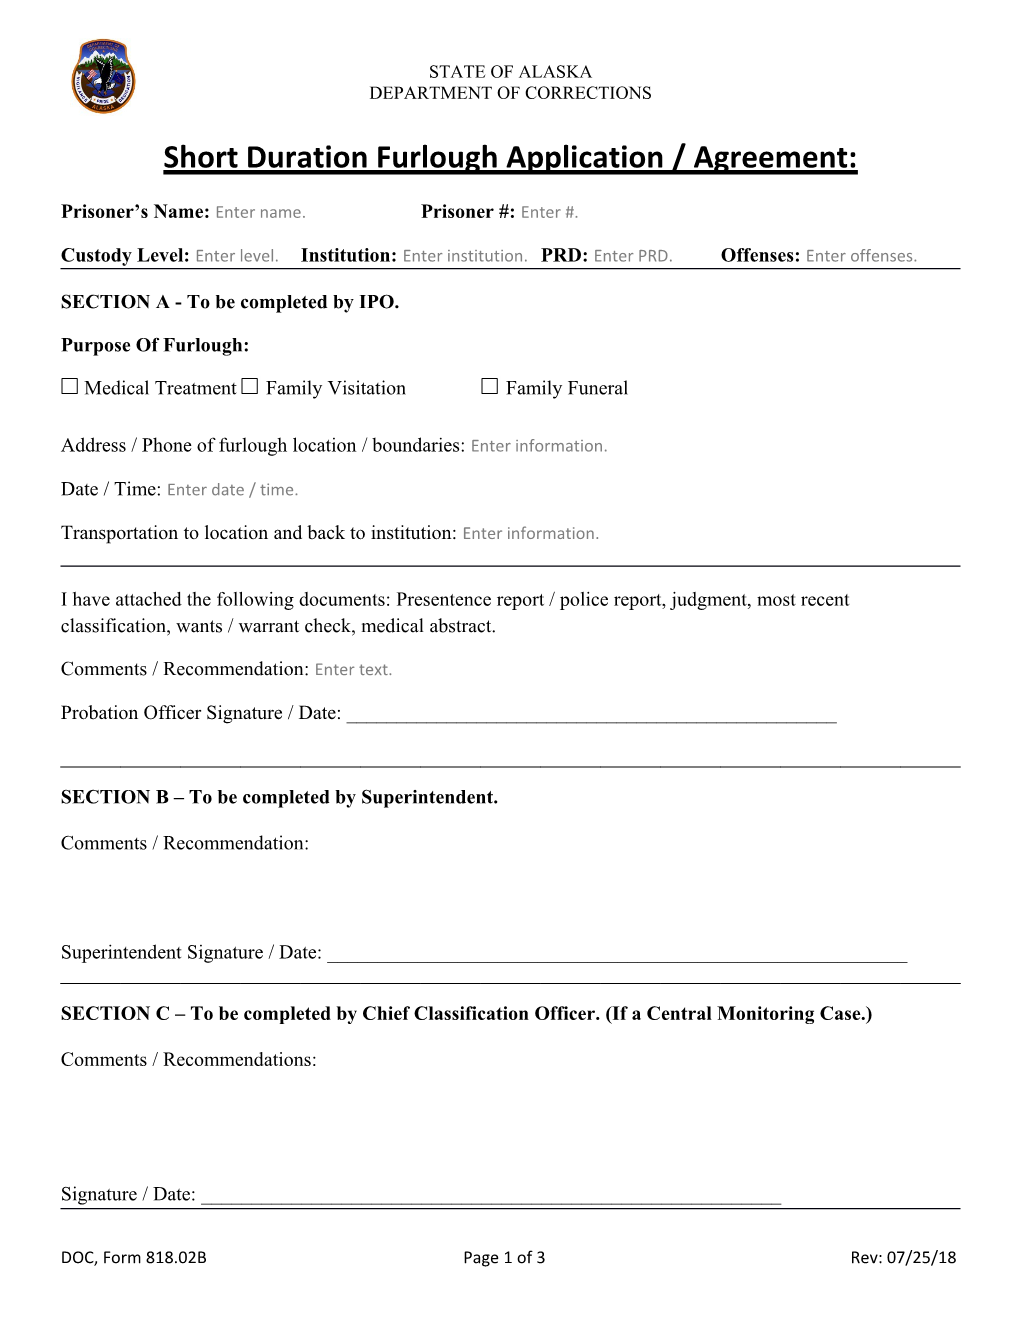 Short Duration Furlough Application / Agreement